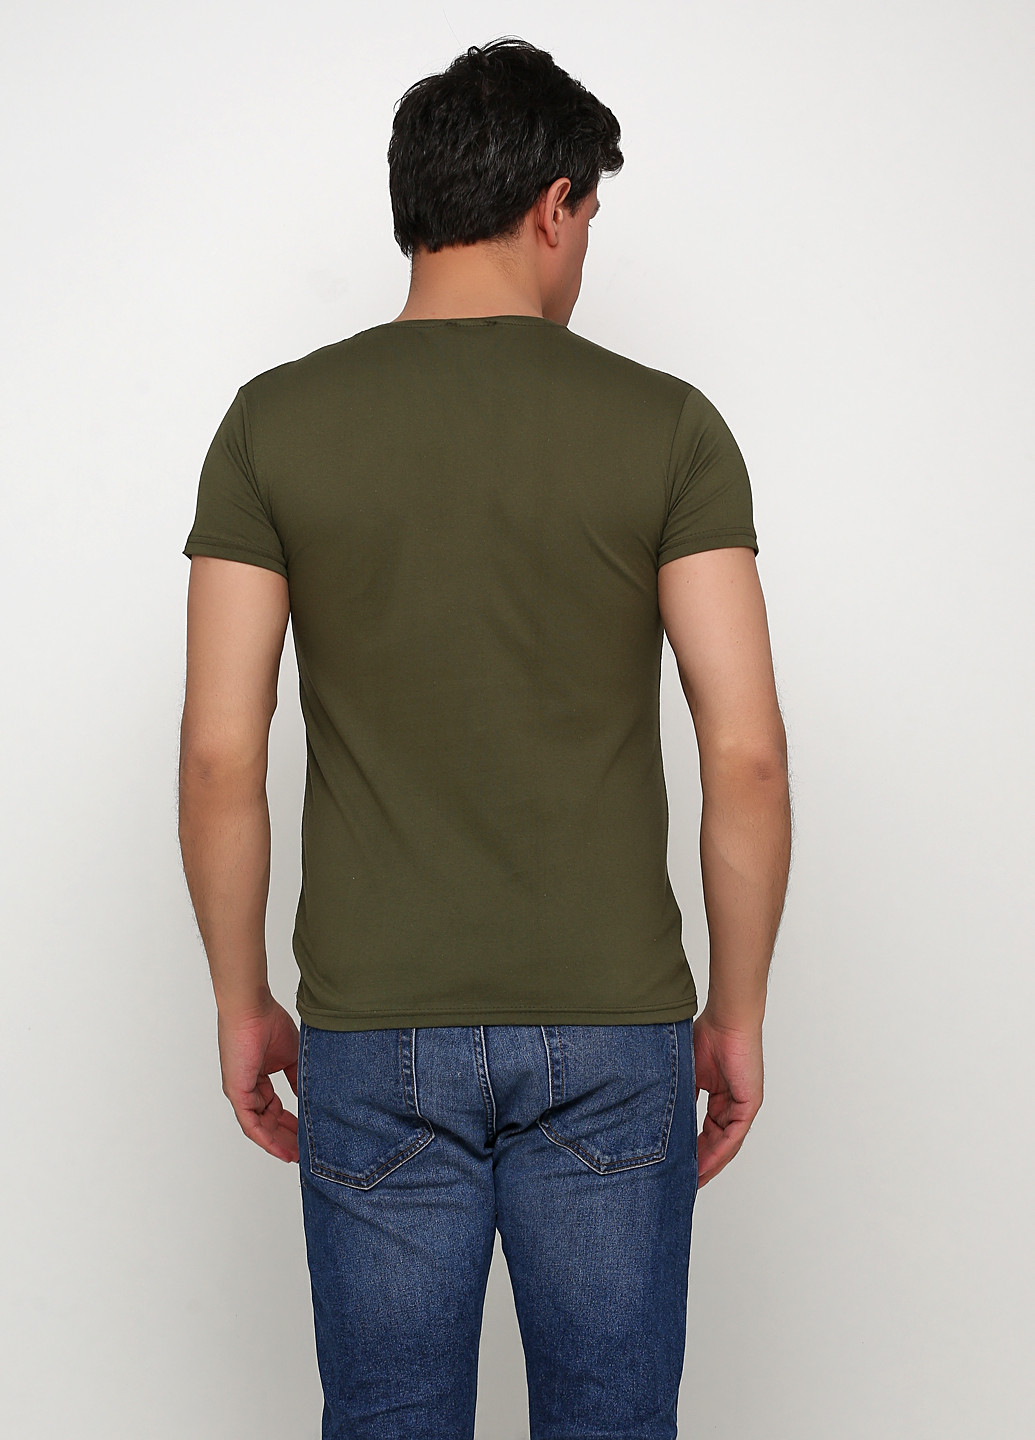 Хаки (оливковая) летняя футболка By strongman